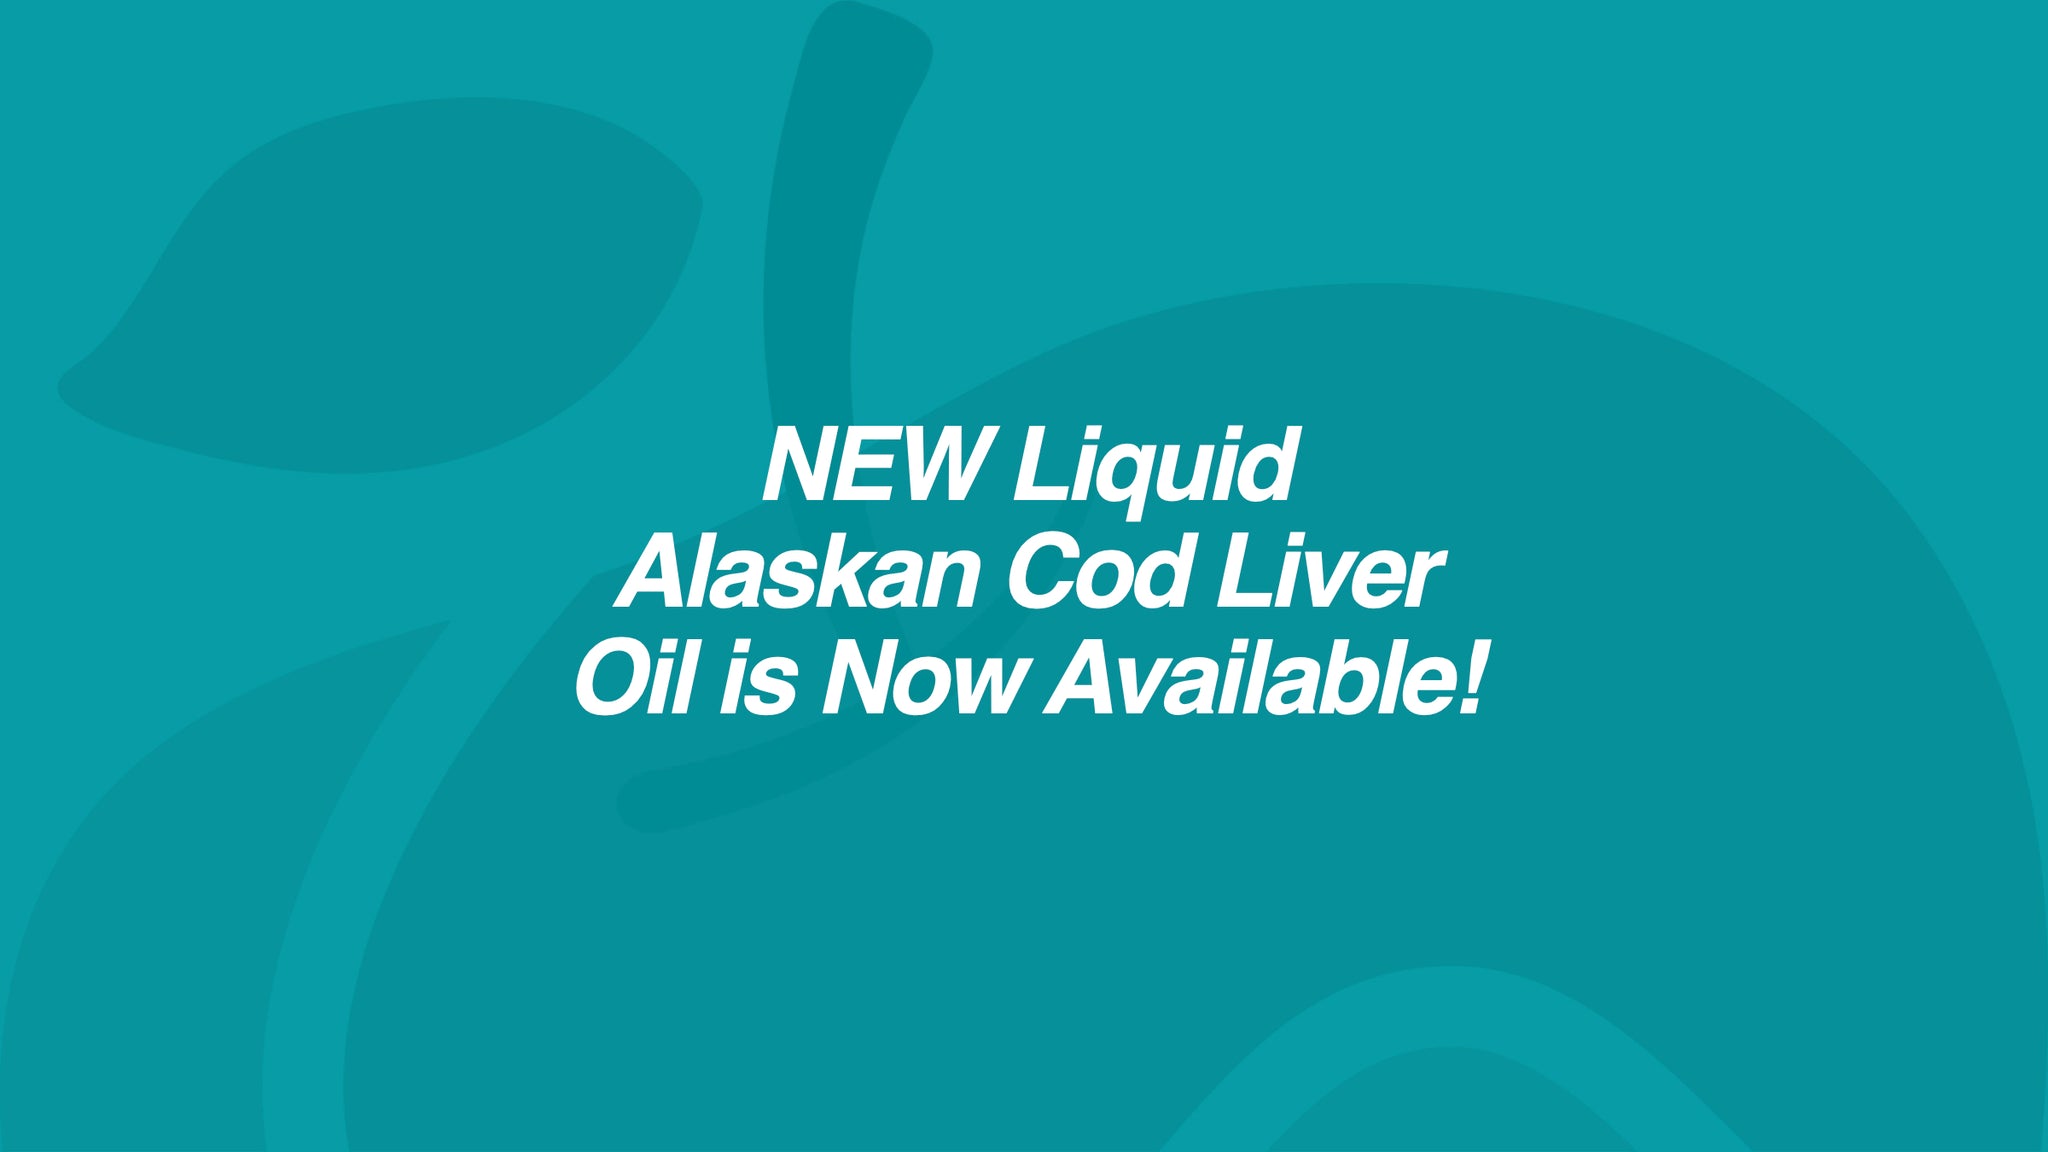 NEW Liquid Alaskan Cod Liver Oil, Now Available!